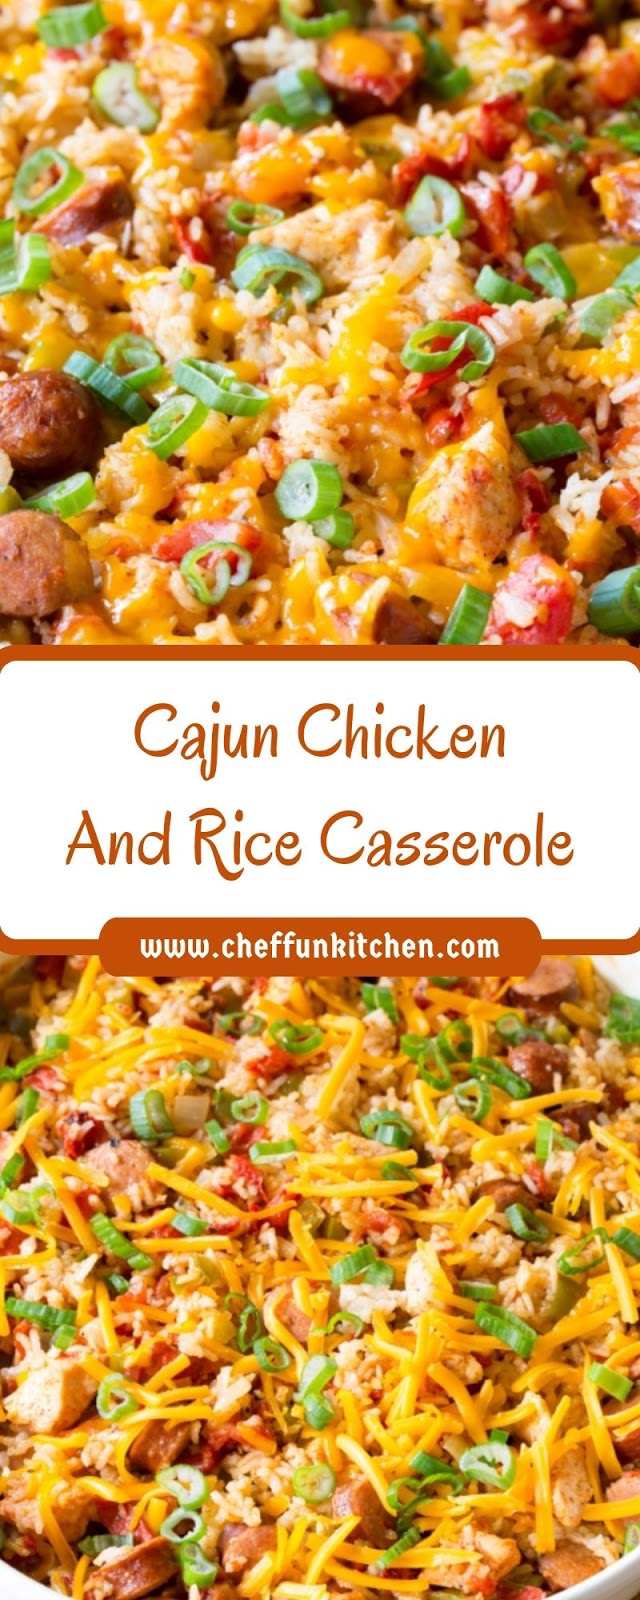 Cajun Chicken And Rice Casserole